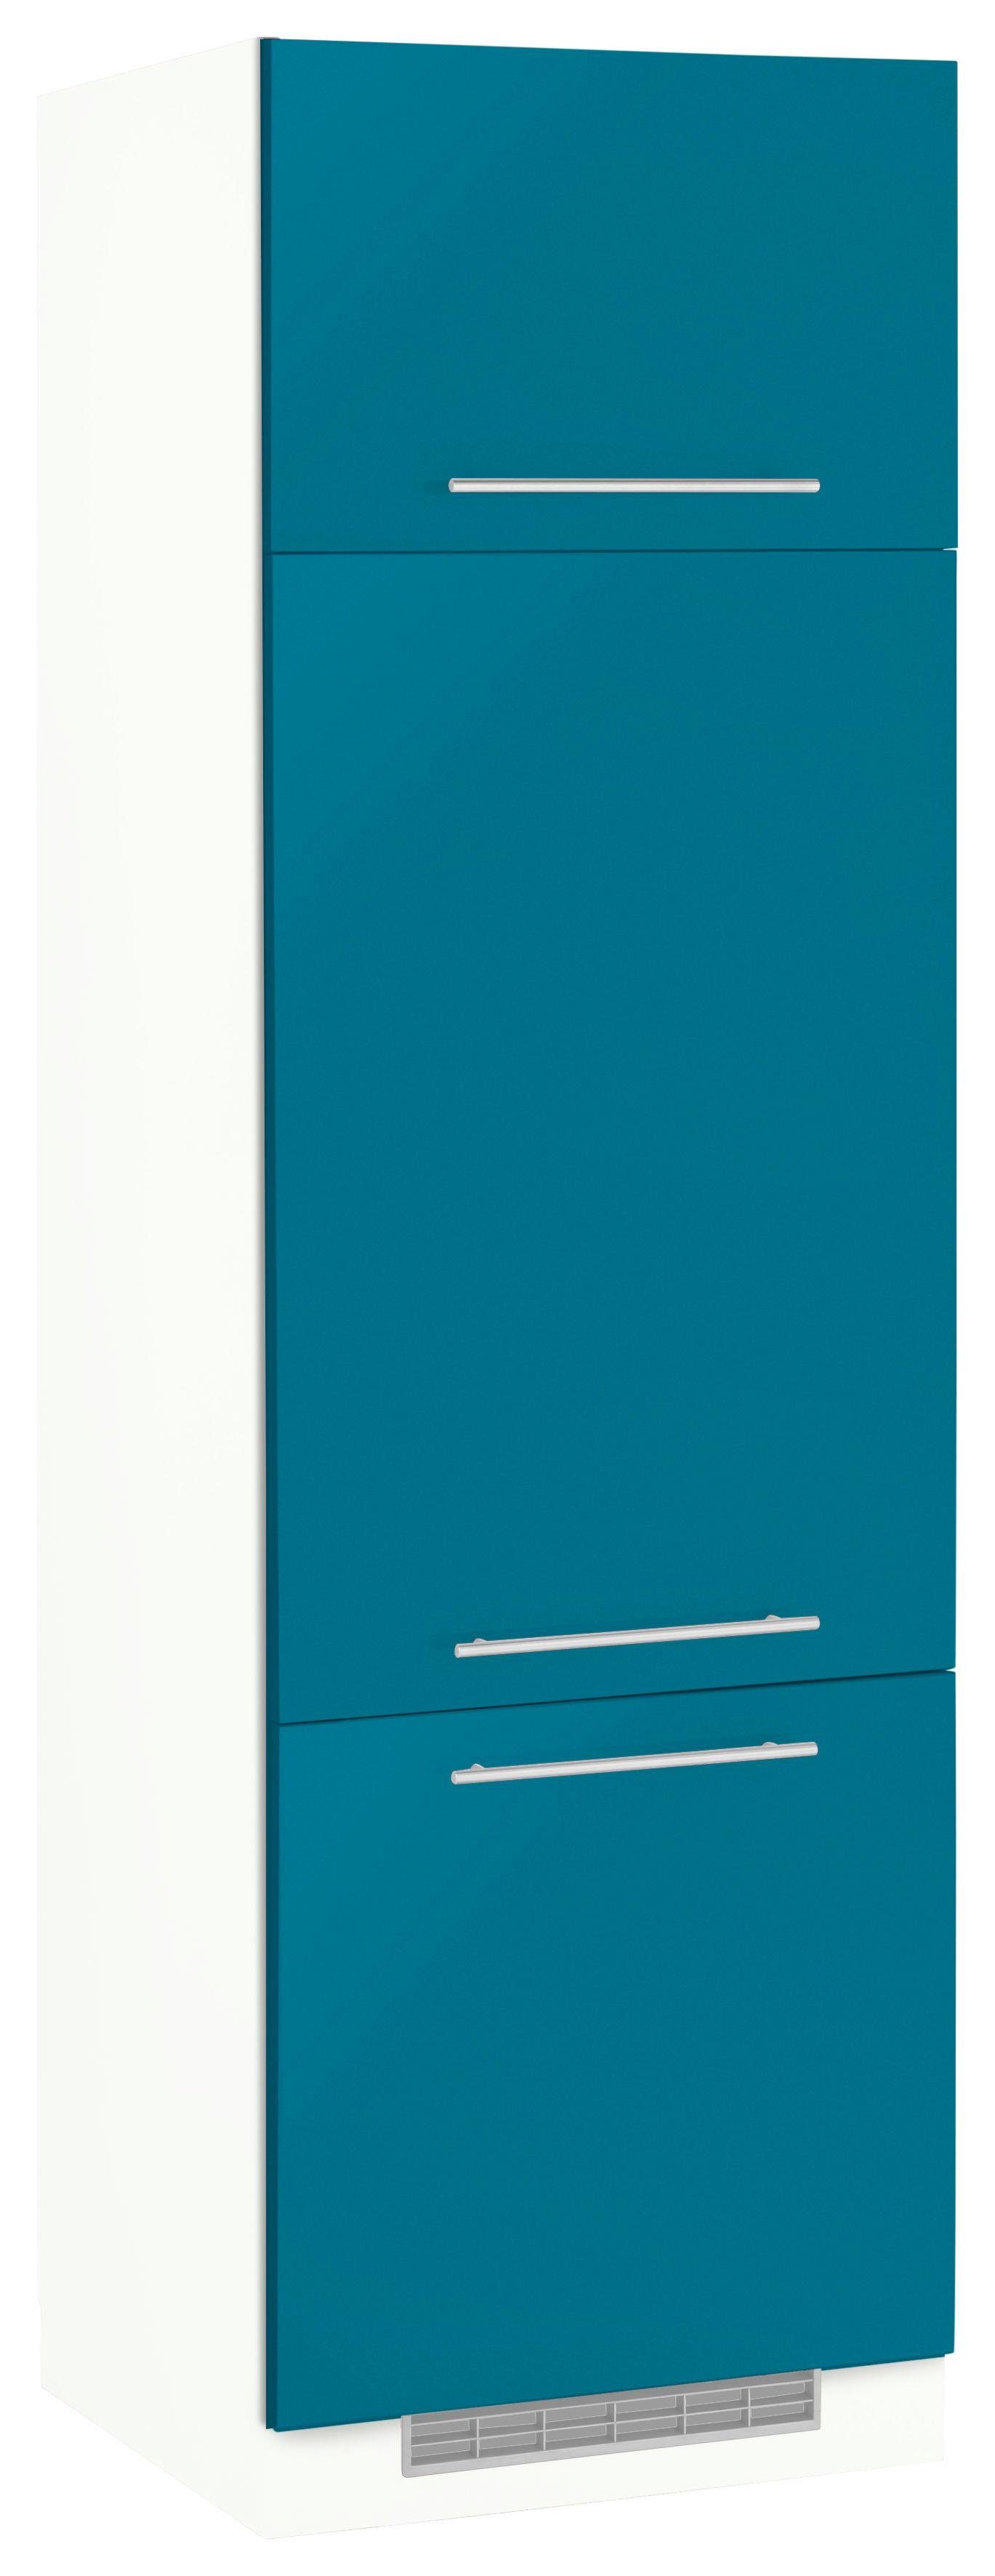 wiho Küchen Kühlumbauschrank Flexi2 ozeanblau/weiß | Umbauschränke